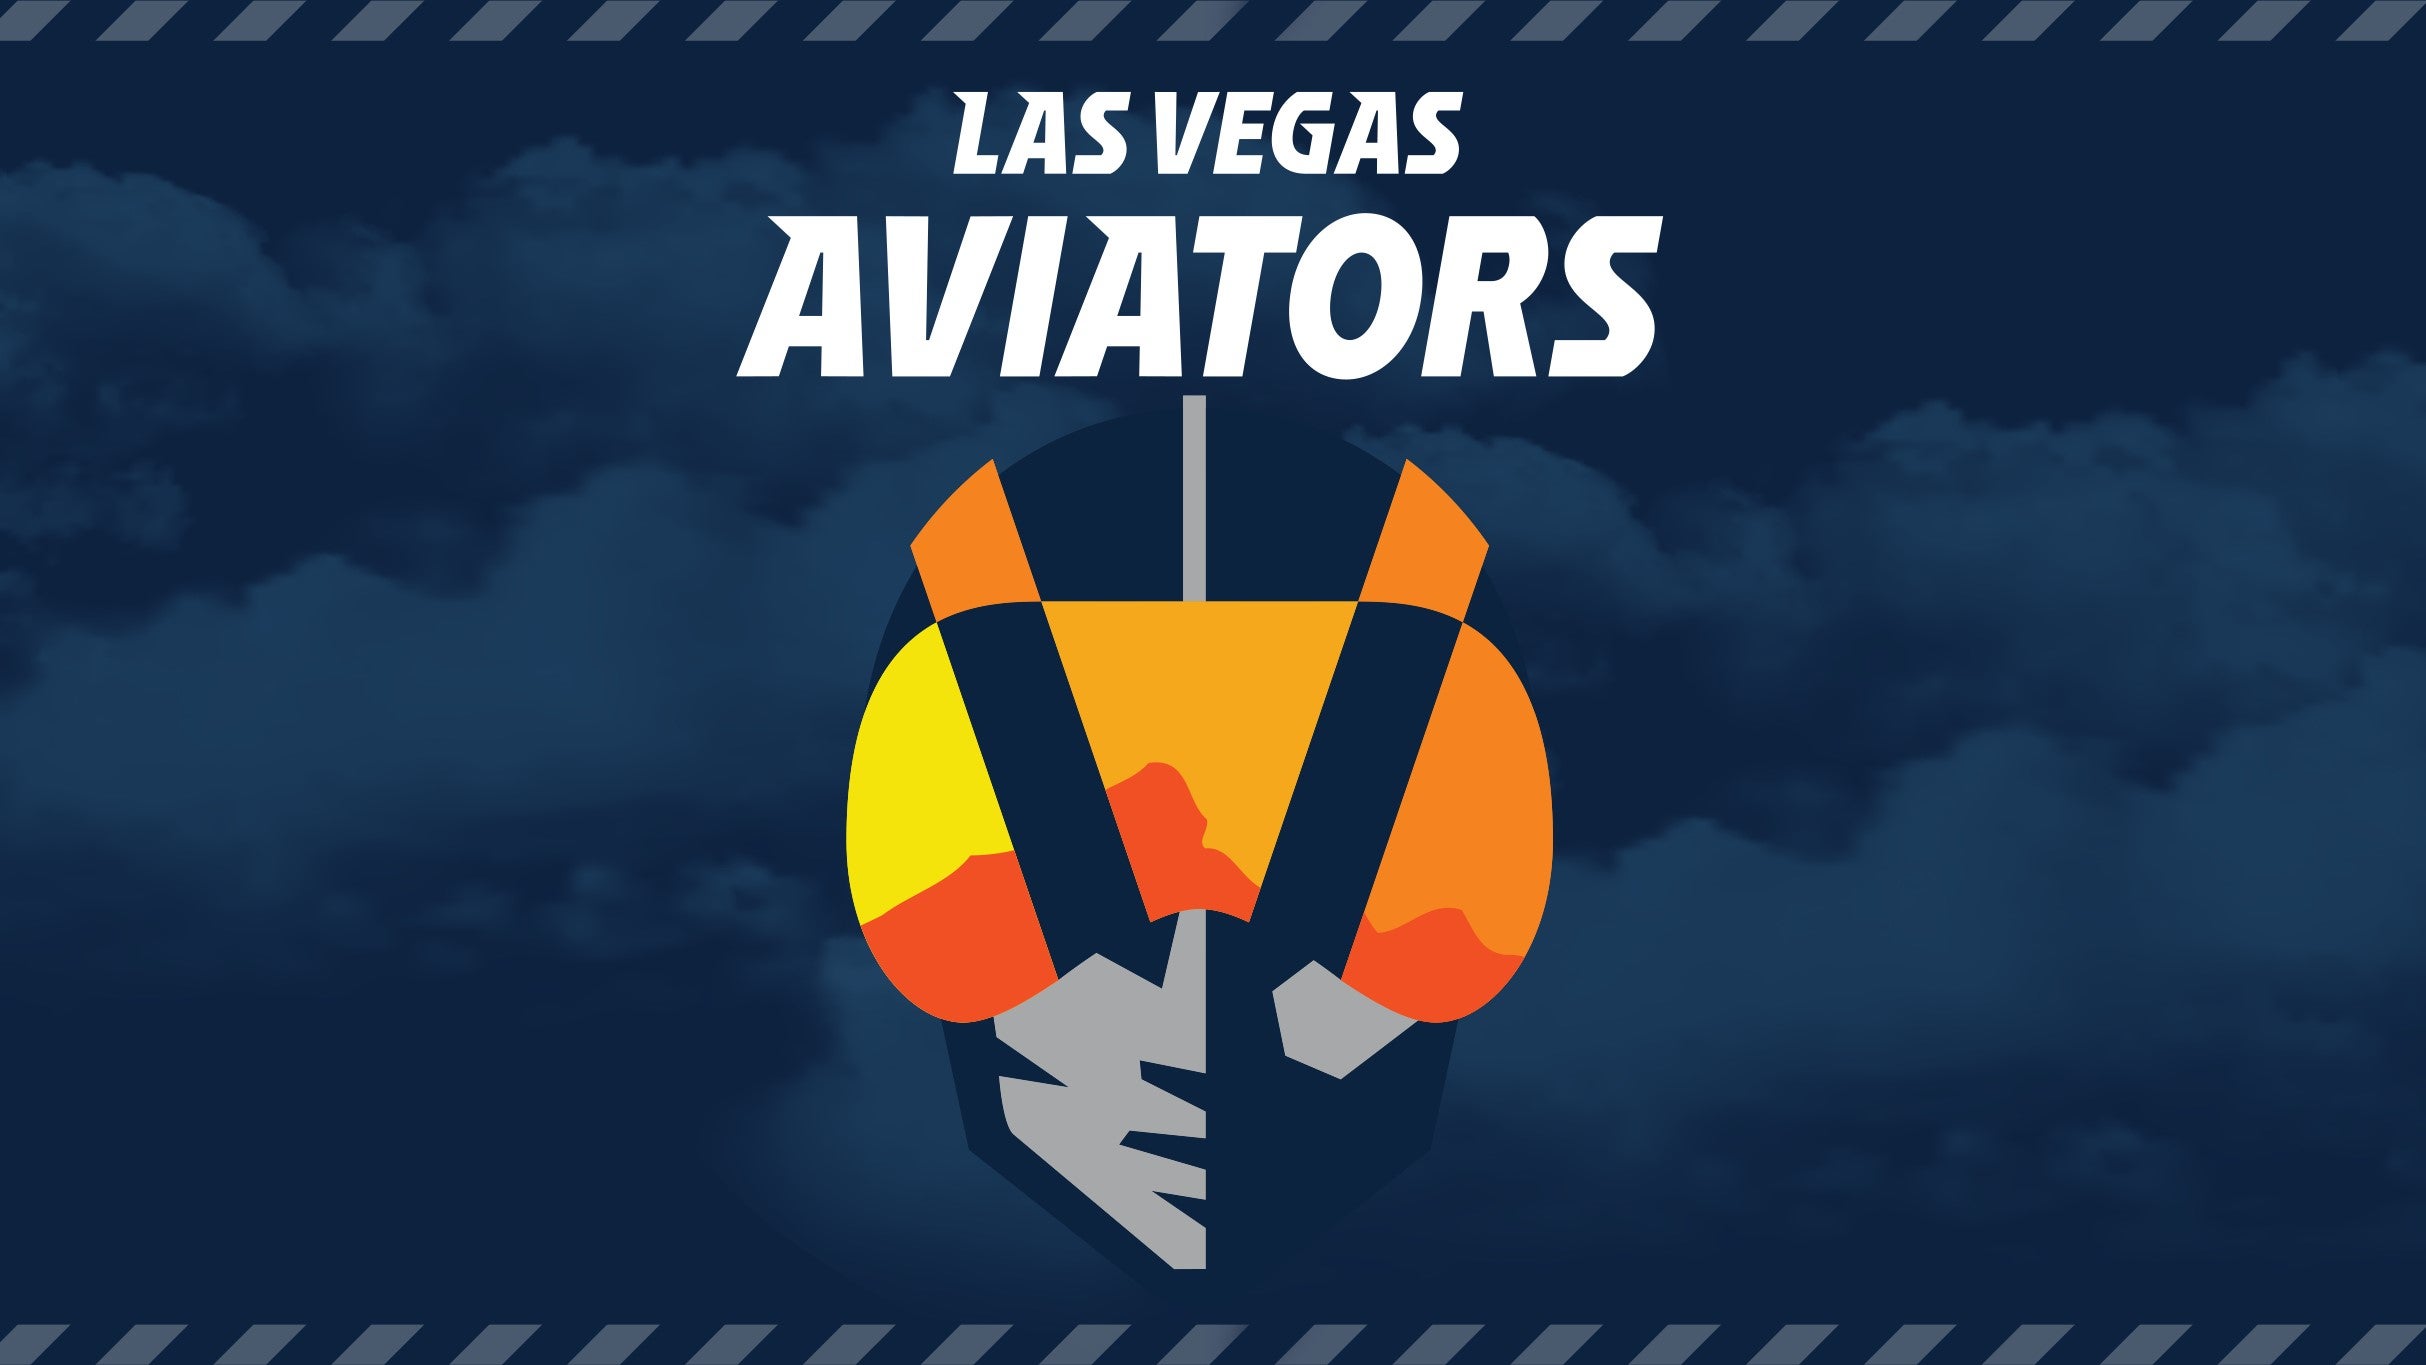 Las Vegas Aviators vs. Round Rock Express presales in Las Vegas